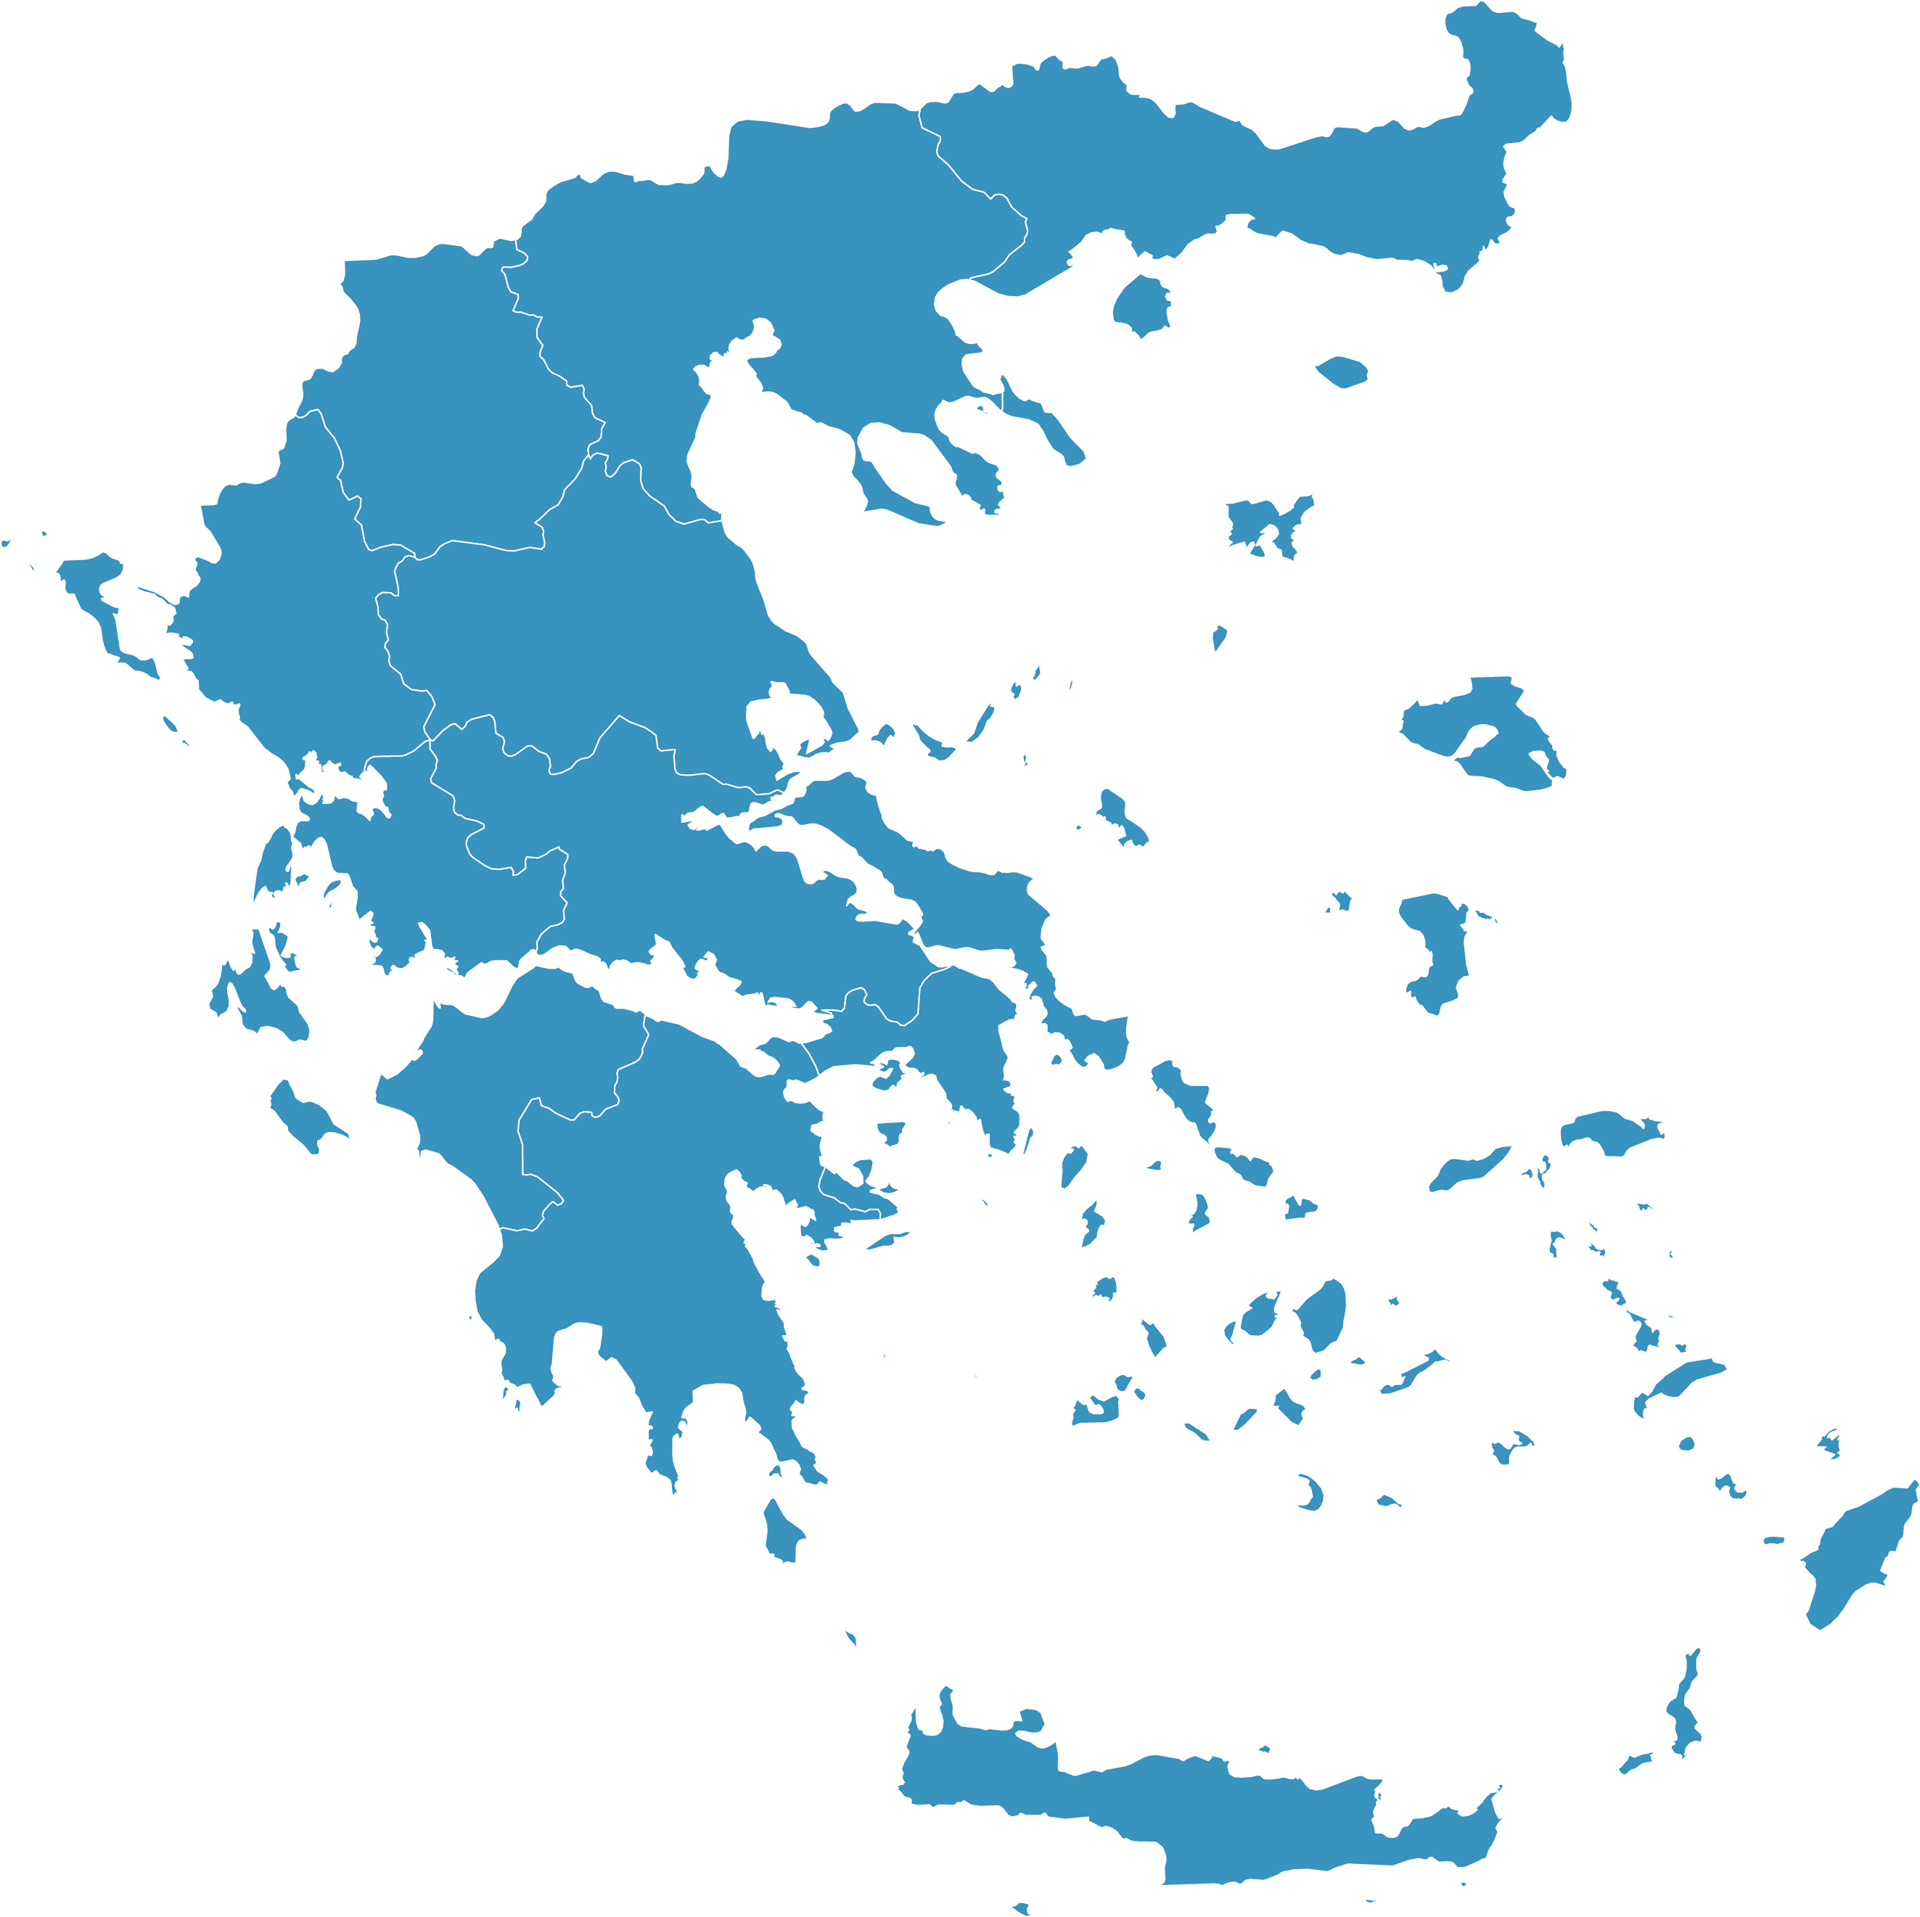 greece map